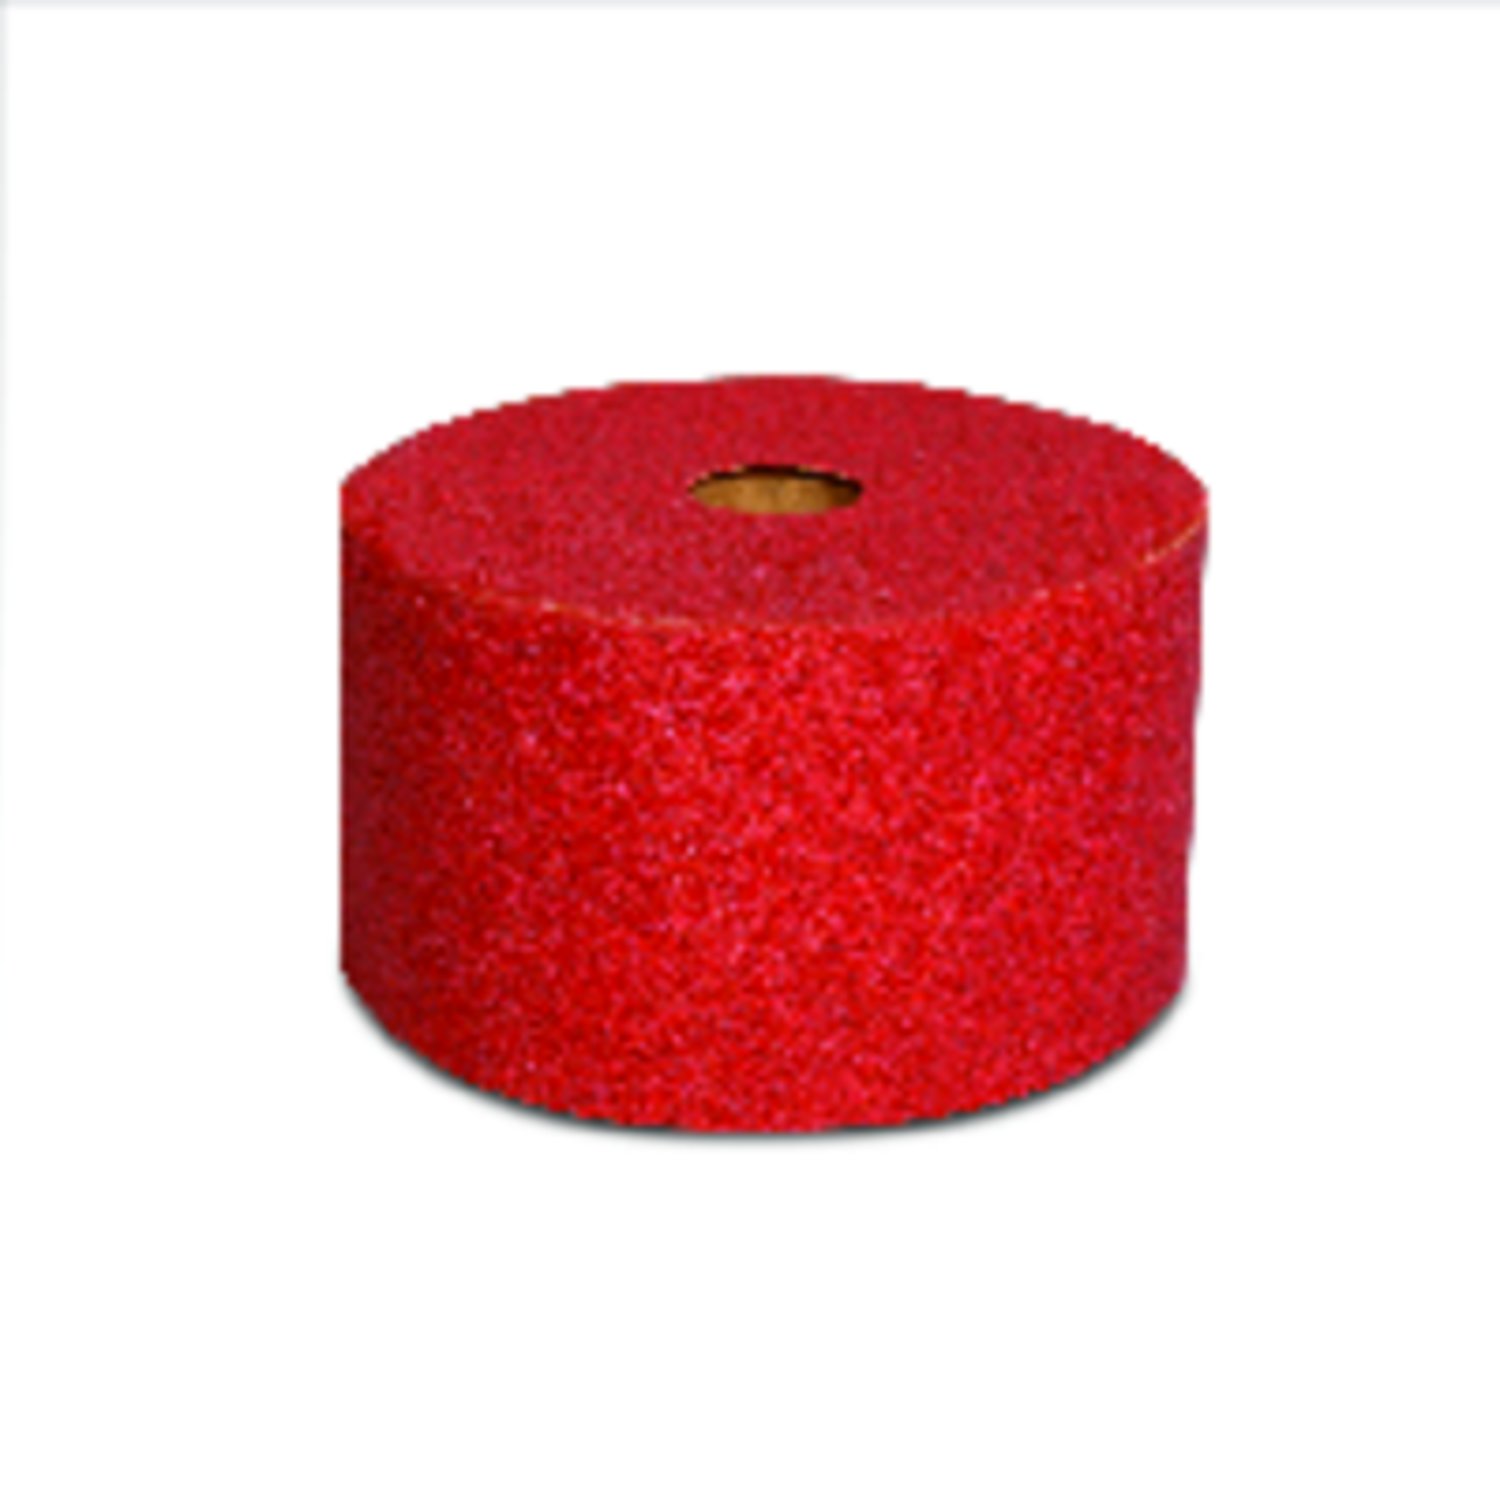 7000119926 - 3M Red Abrasive Stikit Sheet Roll, 01683, P240, 2-3/4 in x 25 yd, 6
rolls per case